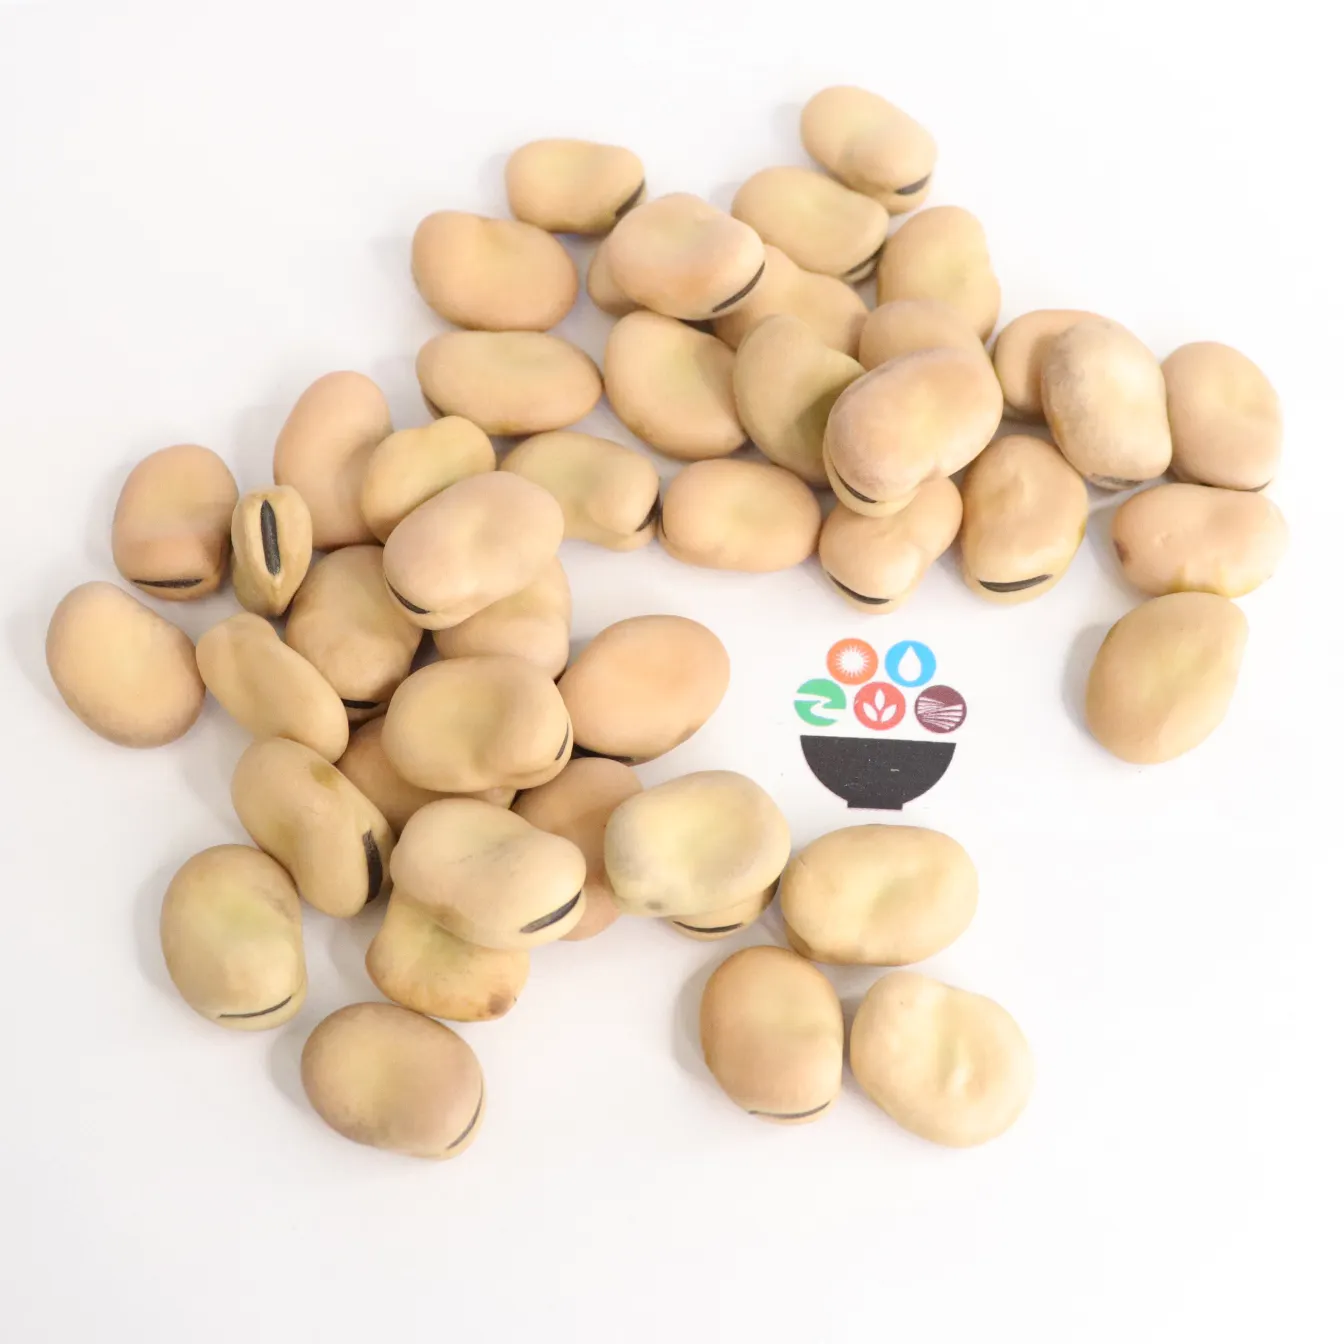 Wholesale dried New Crop Broad Fava Bean Organic